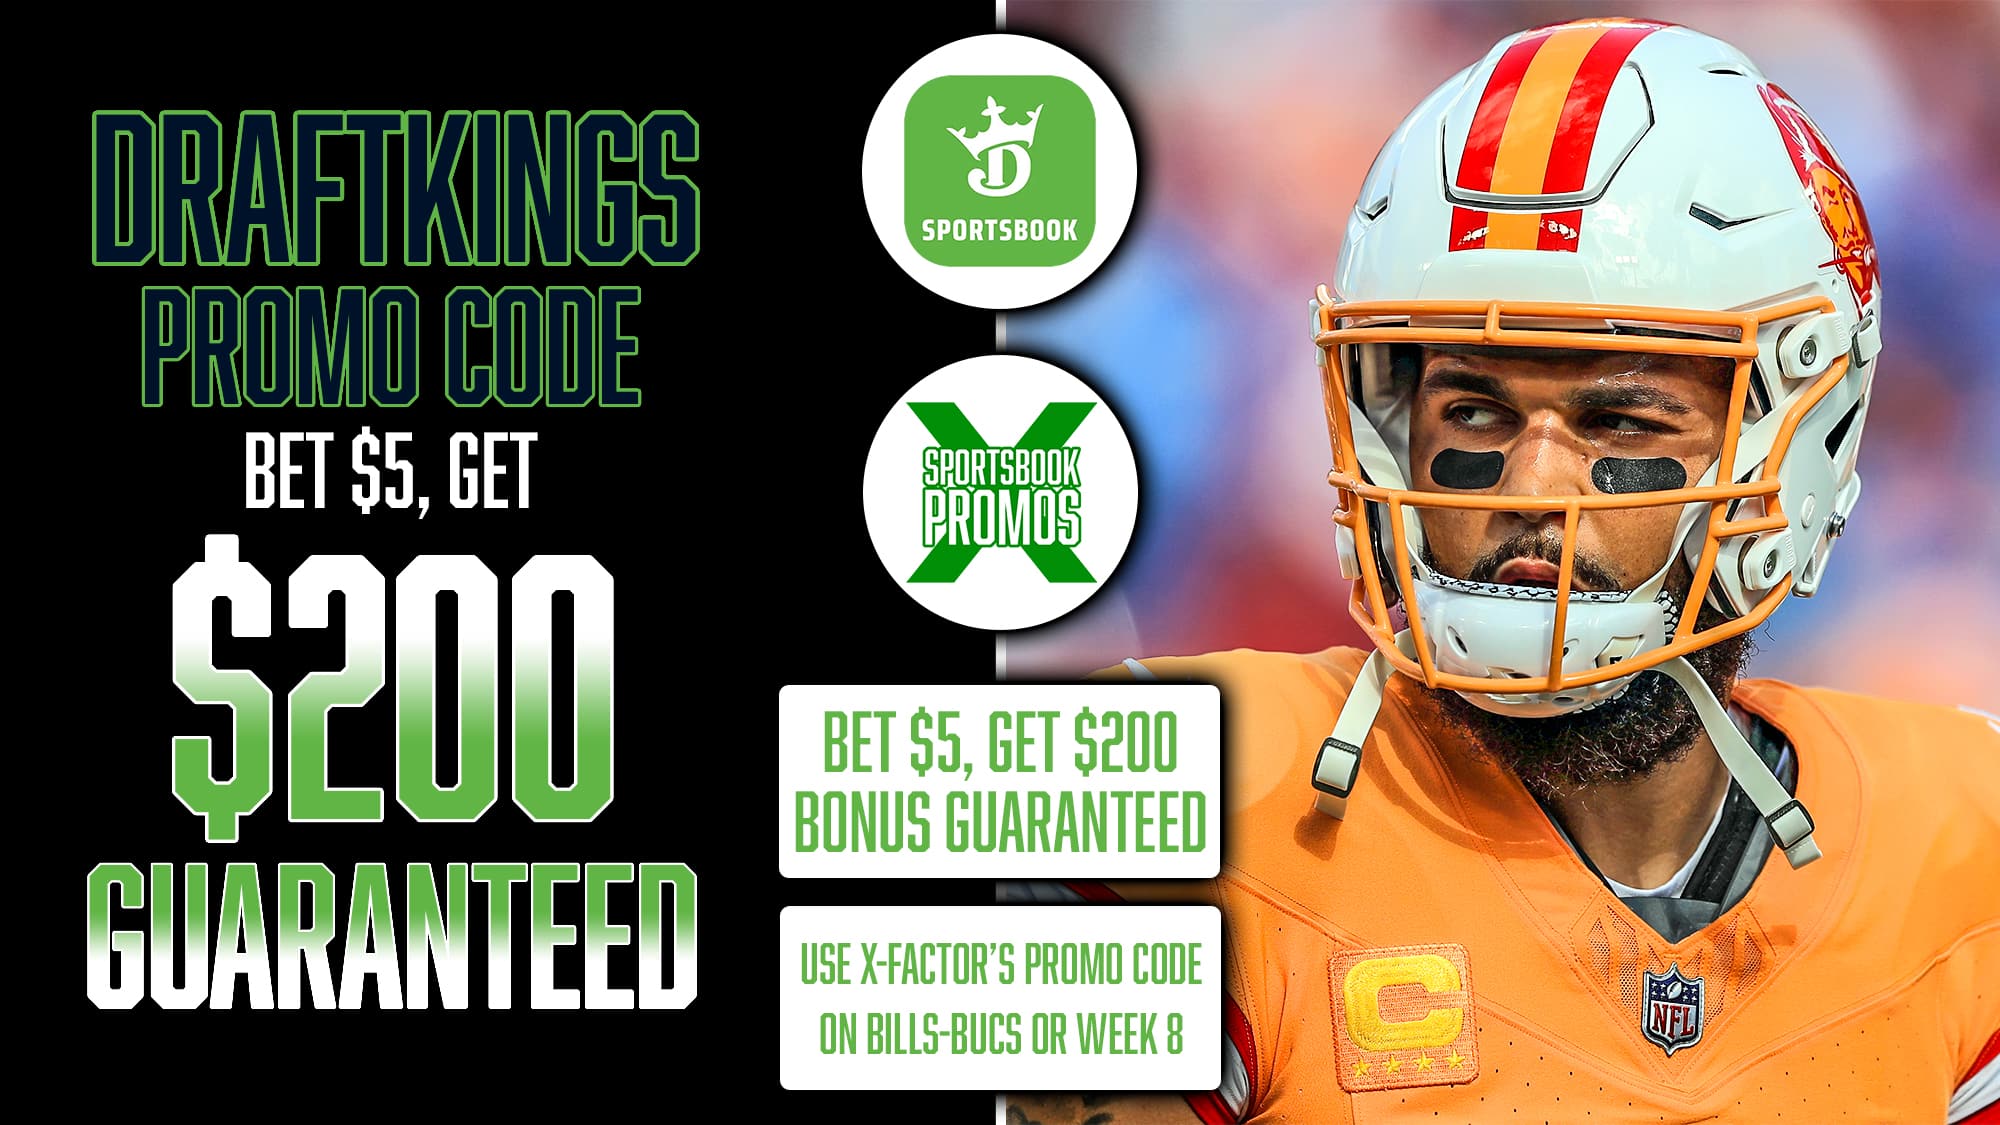 DraftKings Promo Code, Get $200 Guaranteed Bonus, Bills vs. Bucs, NFL Week 8